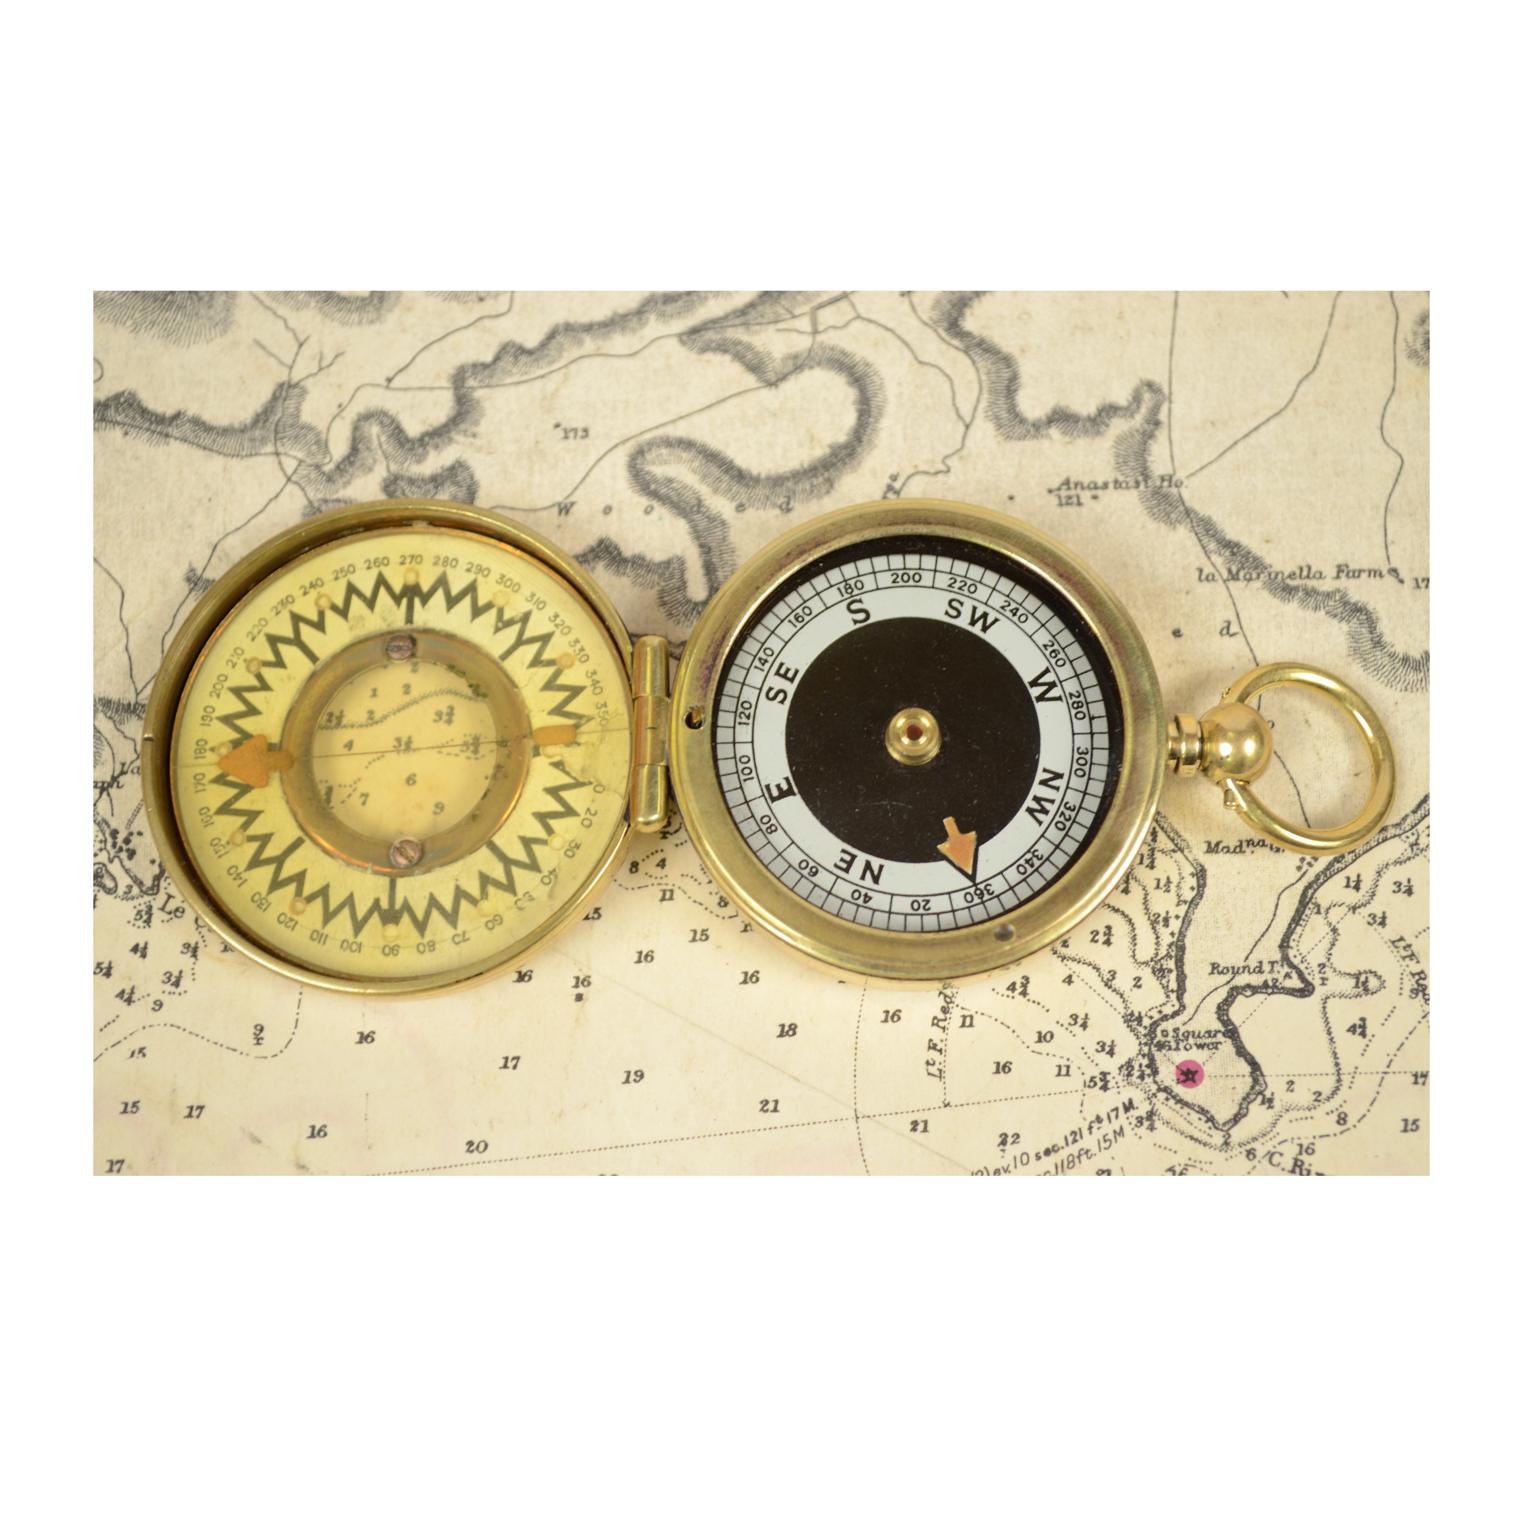 Brass Survey Compass the Magnapole 1